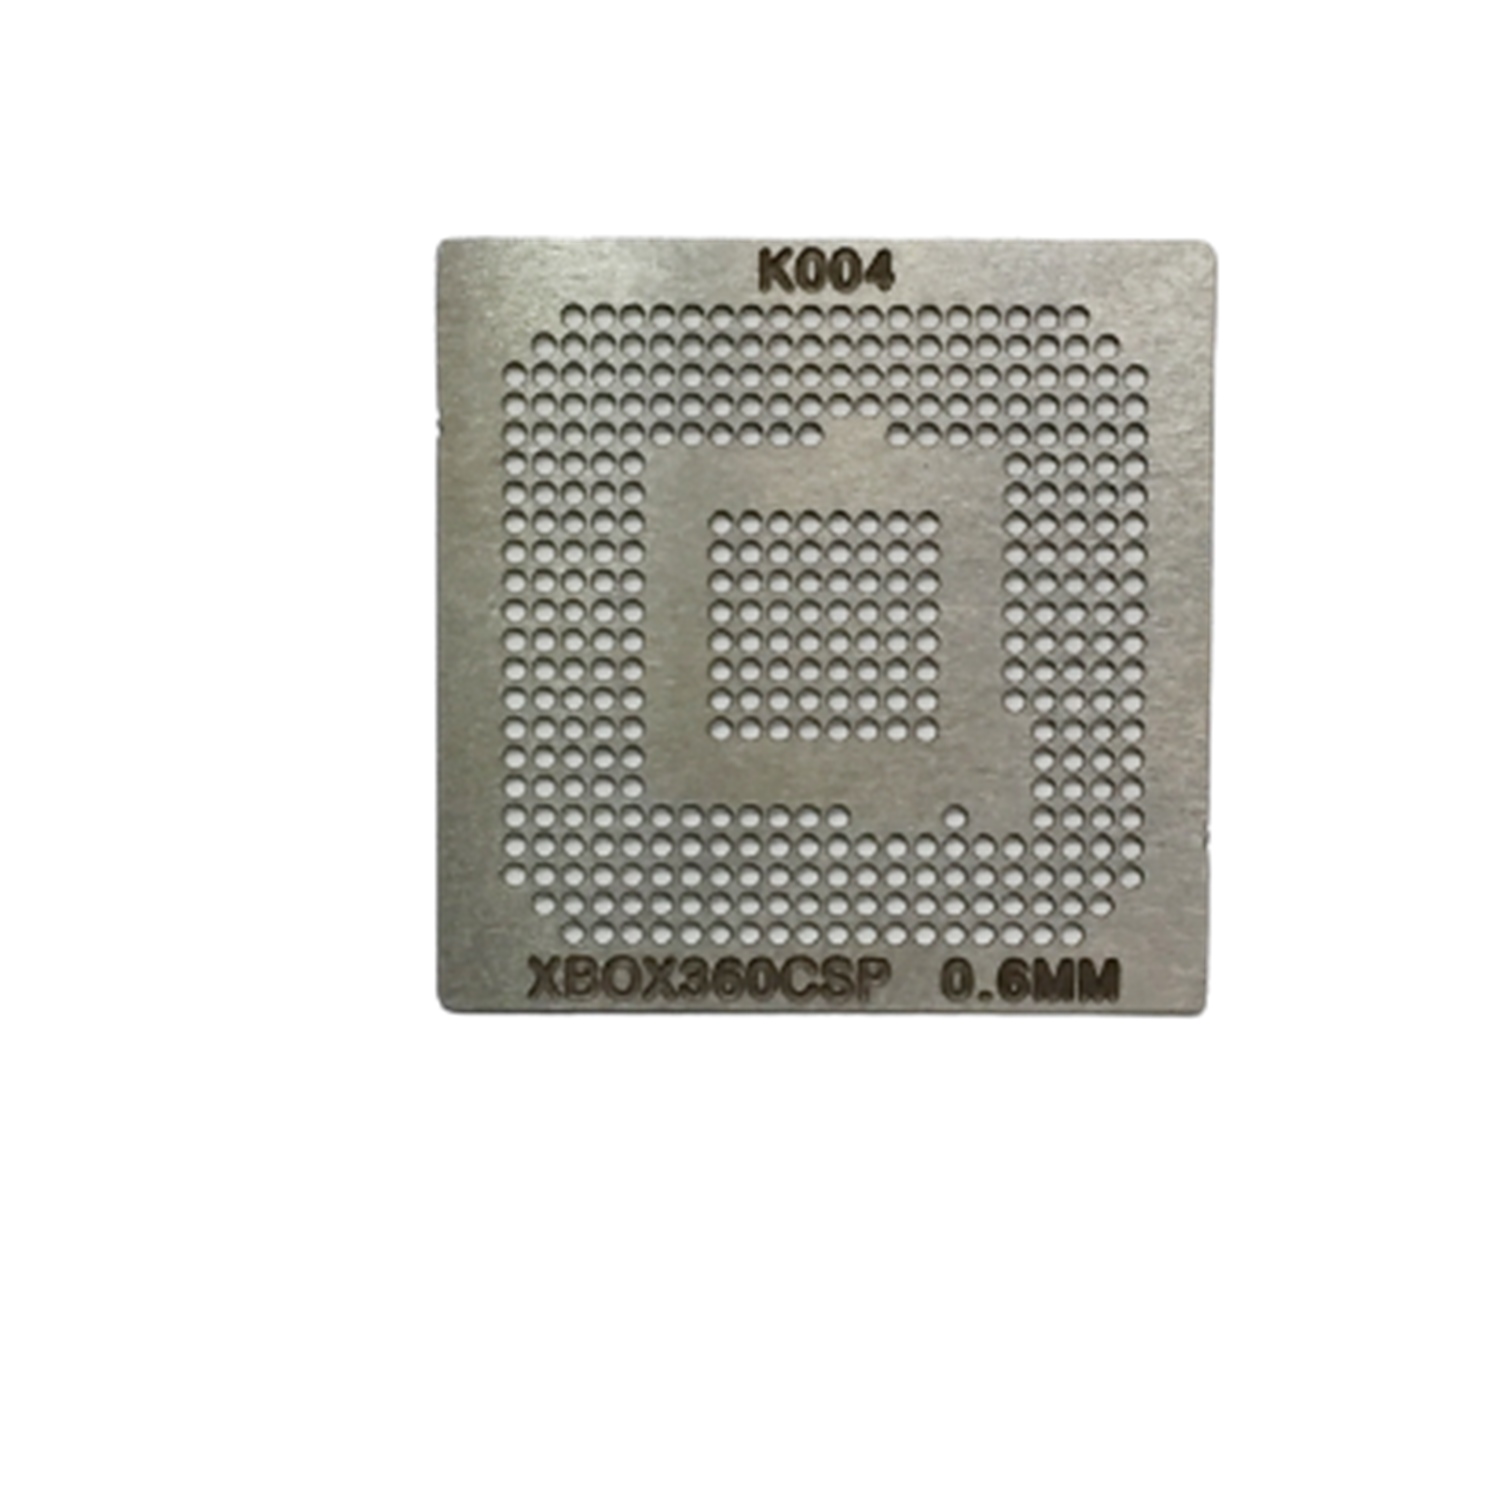 Kit stencil XBOX 360 CSP Bga Calor Direto Reballing GM25 + solda esfera 0.6mm